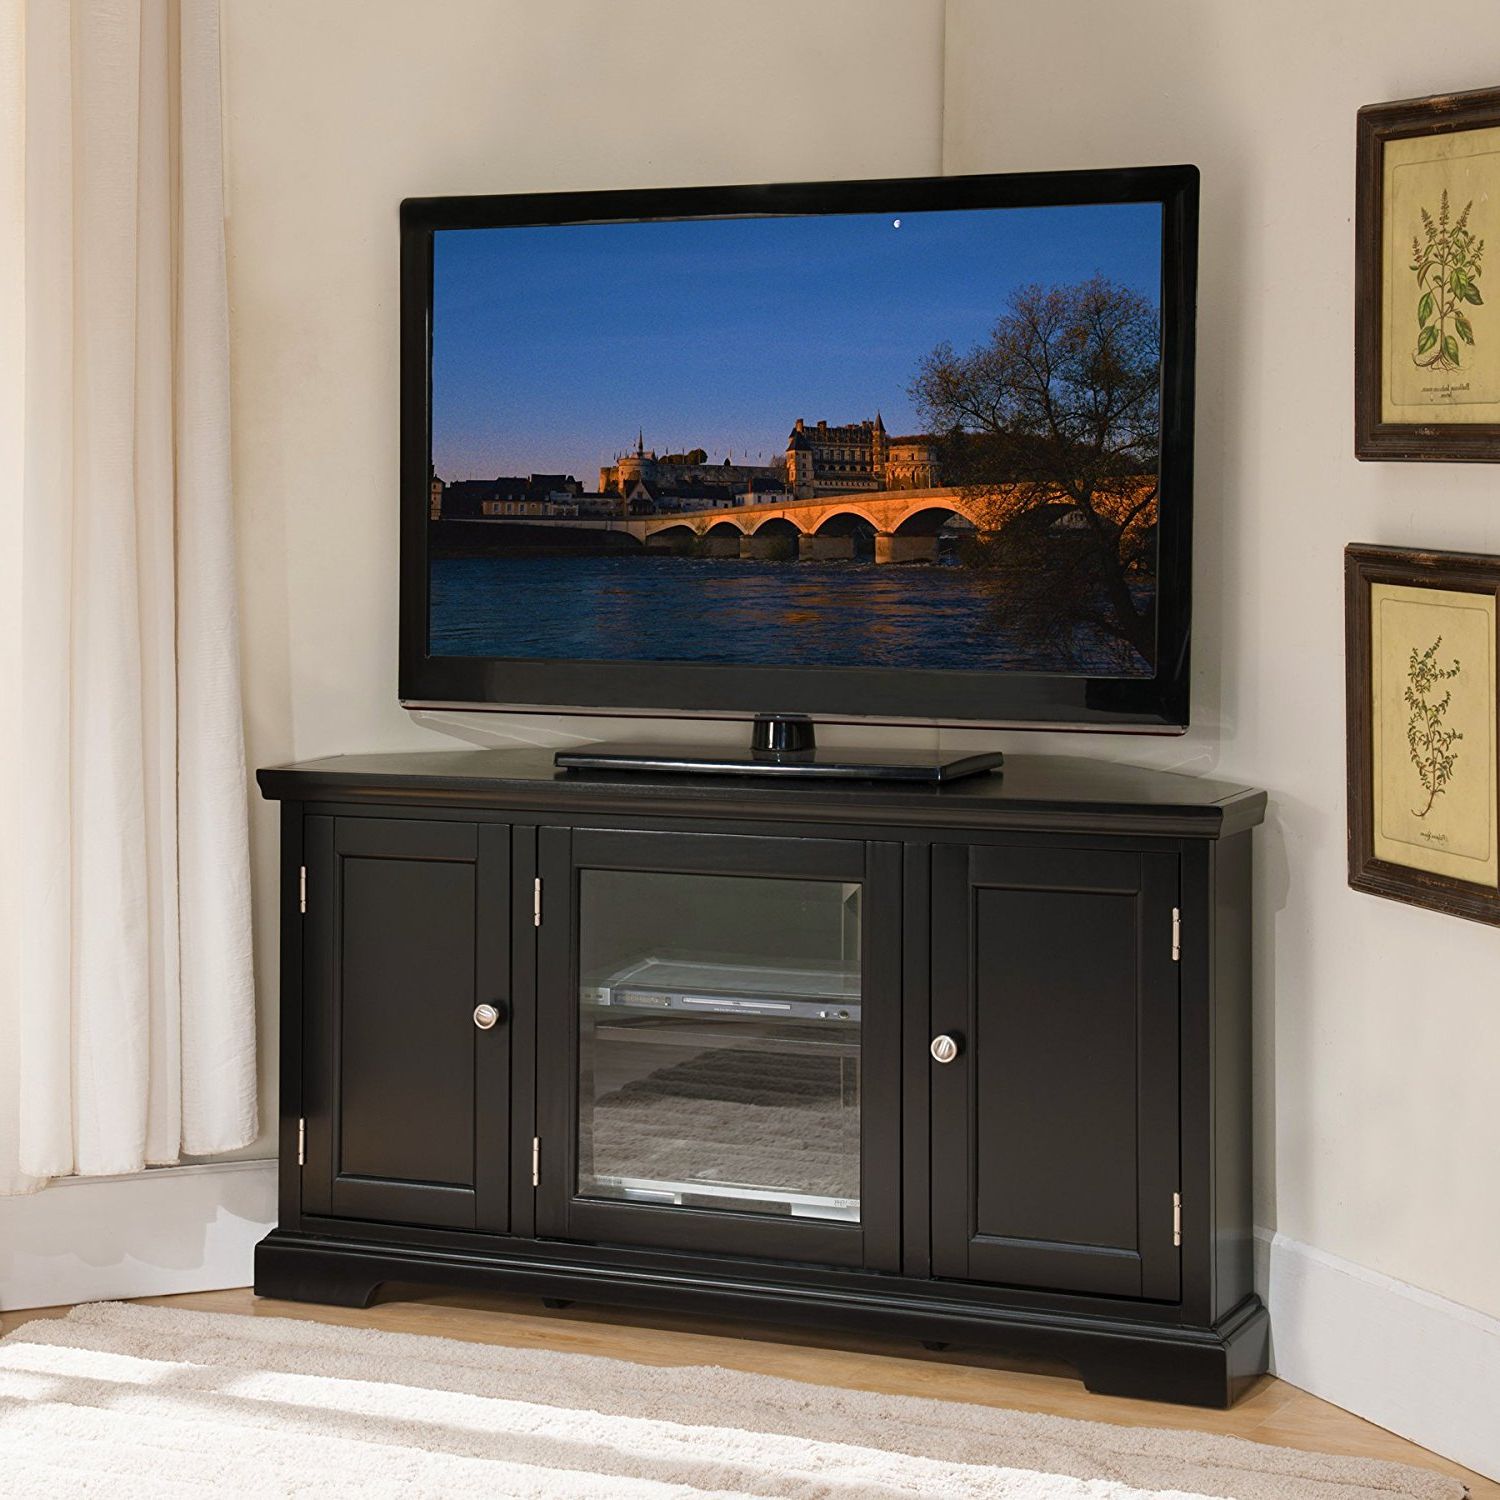 Leick 46 Inch Hardwood Corner Tv Stand In Black Finish Inside Edgeware Black Tv Stands (View 4 of 20)